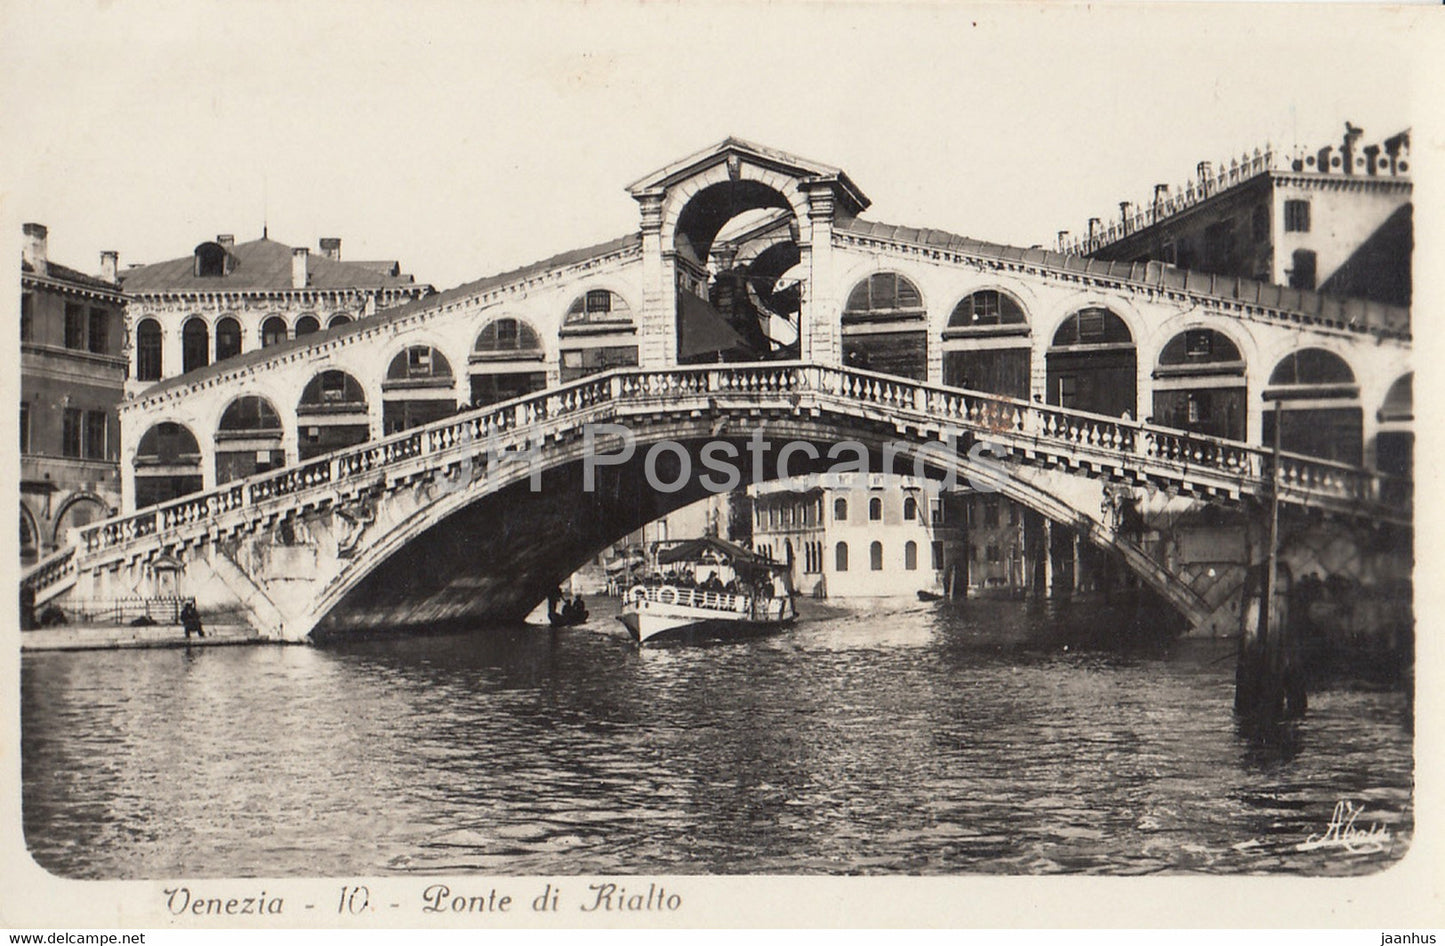 Venezia - Venice - Ponte di Rialto - bridge - 10 - old postcard - Italy - unused - JH Postcards